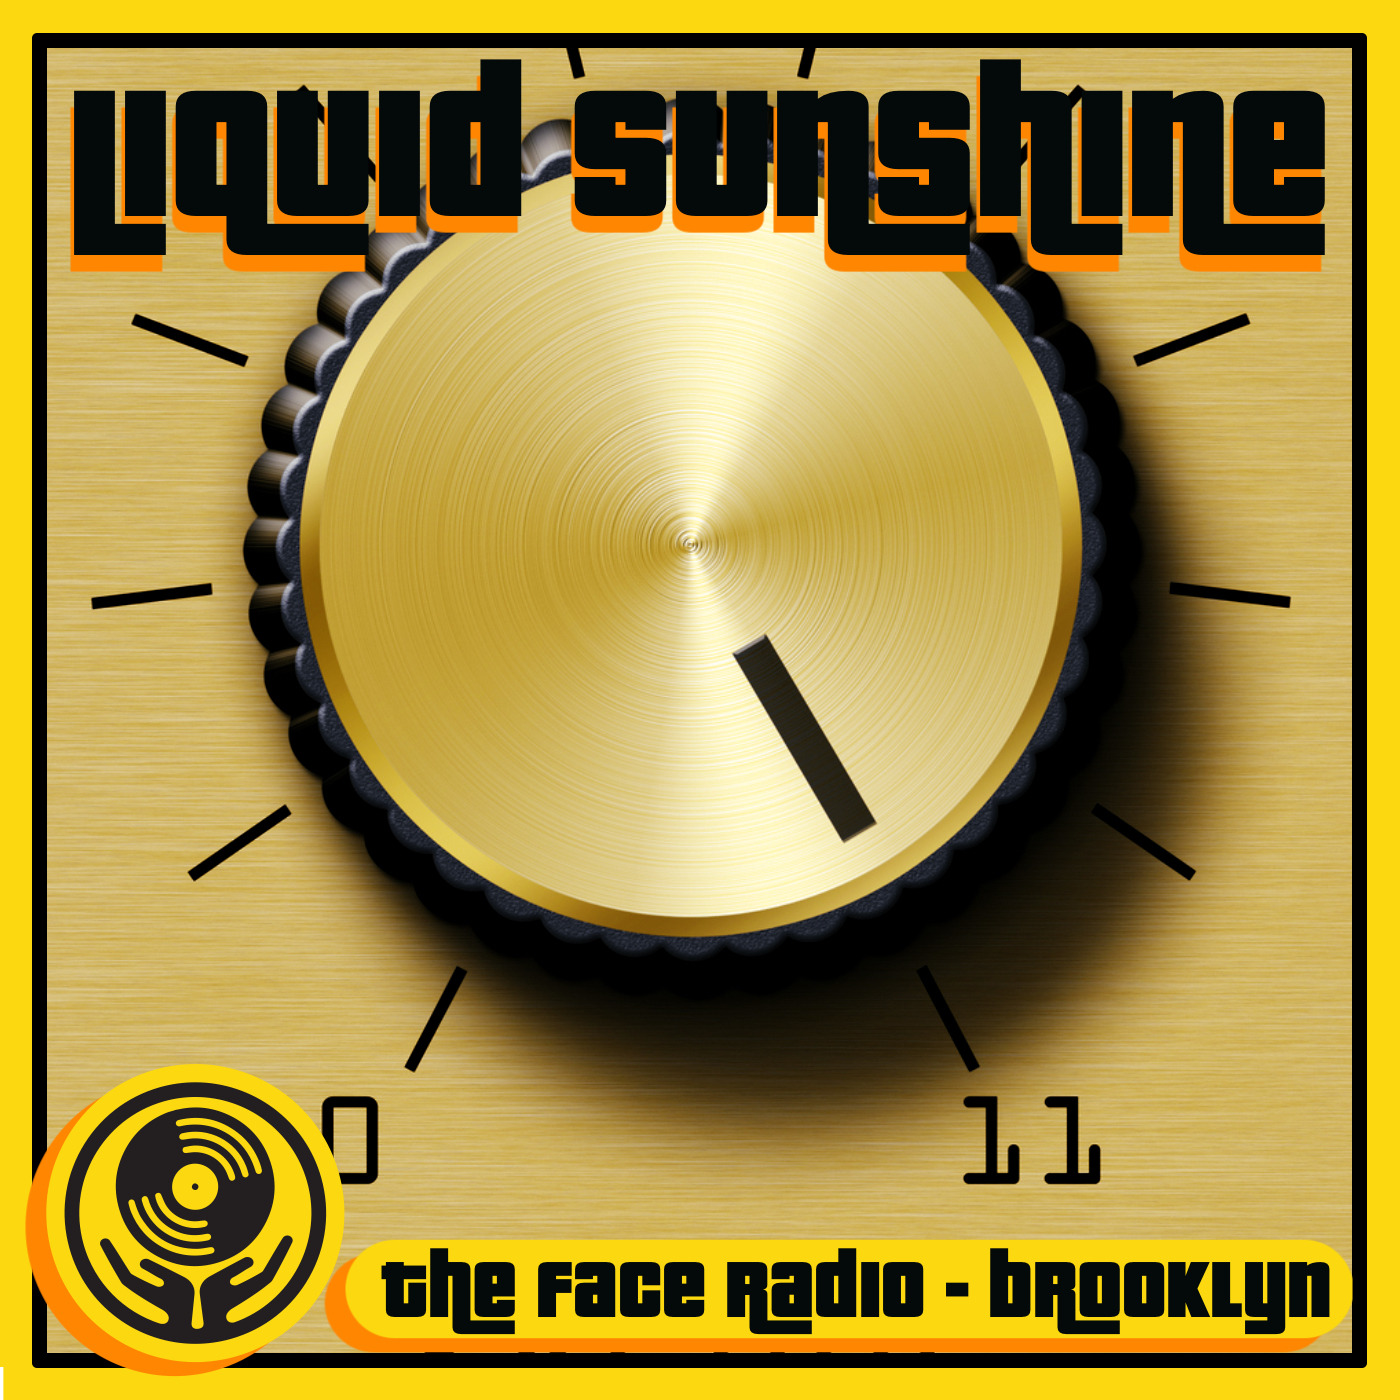 Liquid Sunshine @ The Face Radio - Rotary Bass Boogie - Show #169